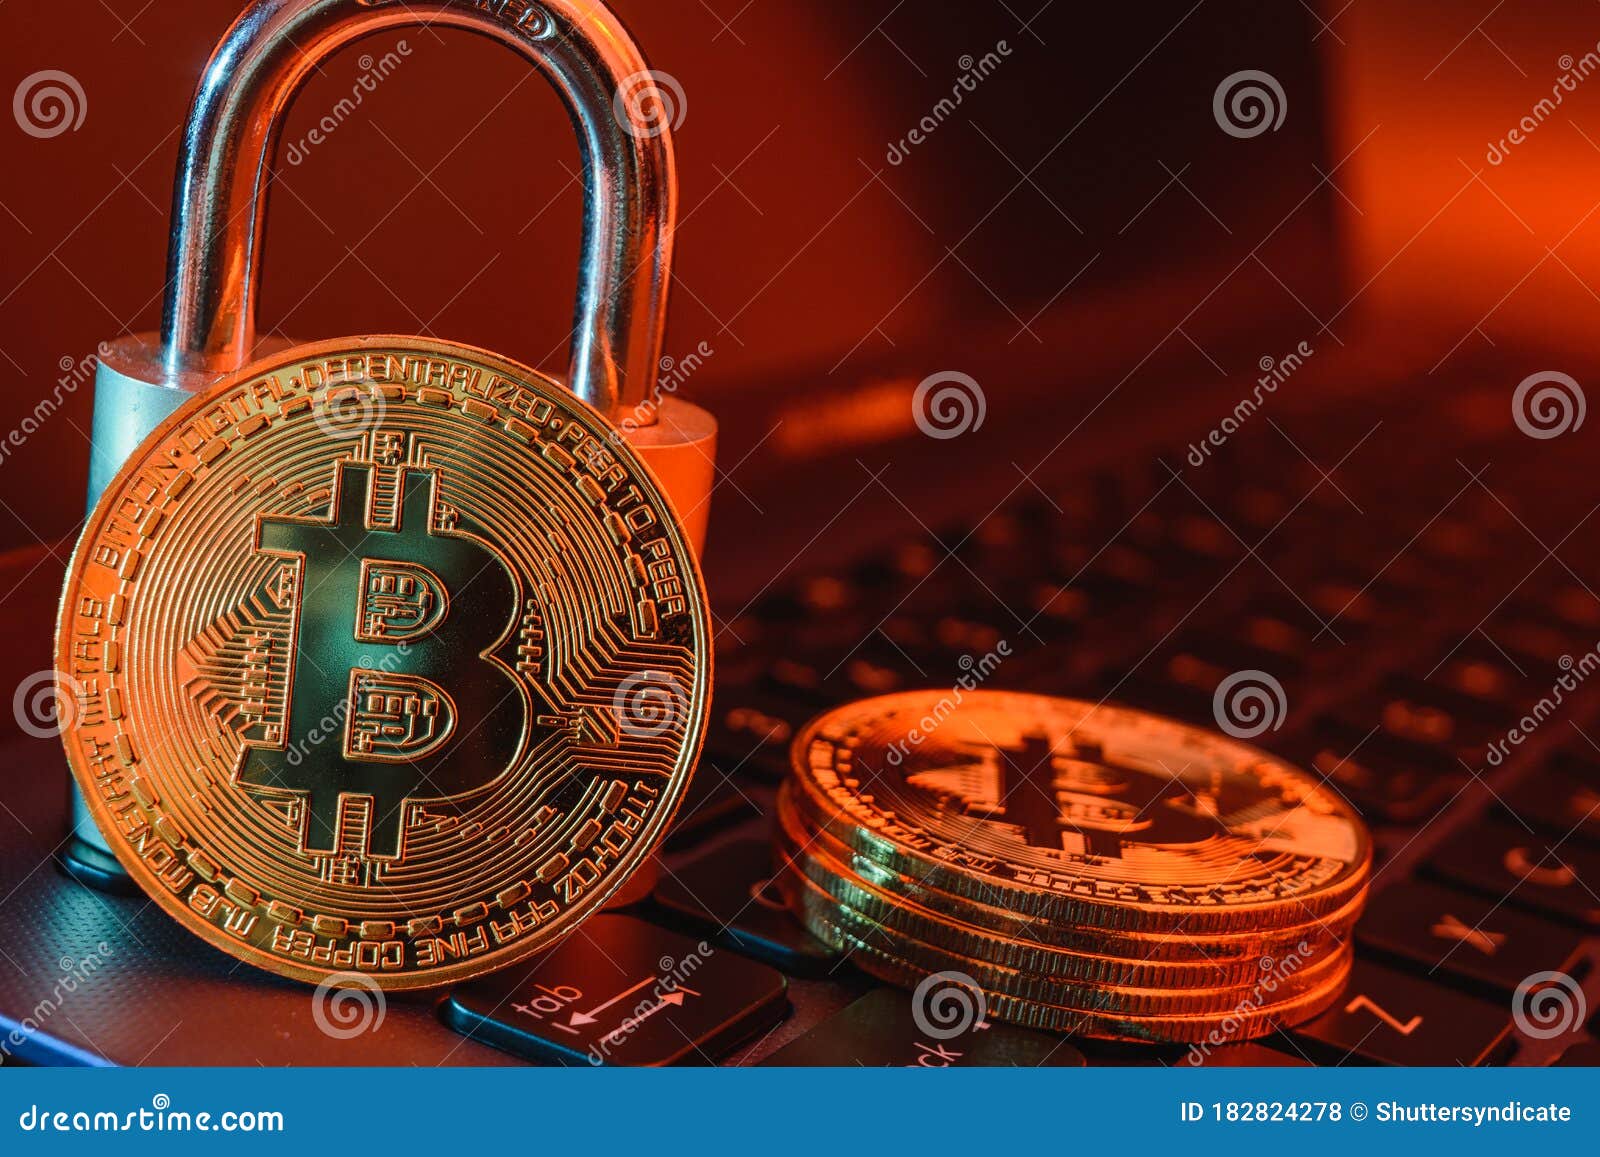 bitcoin security)